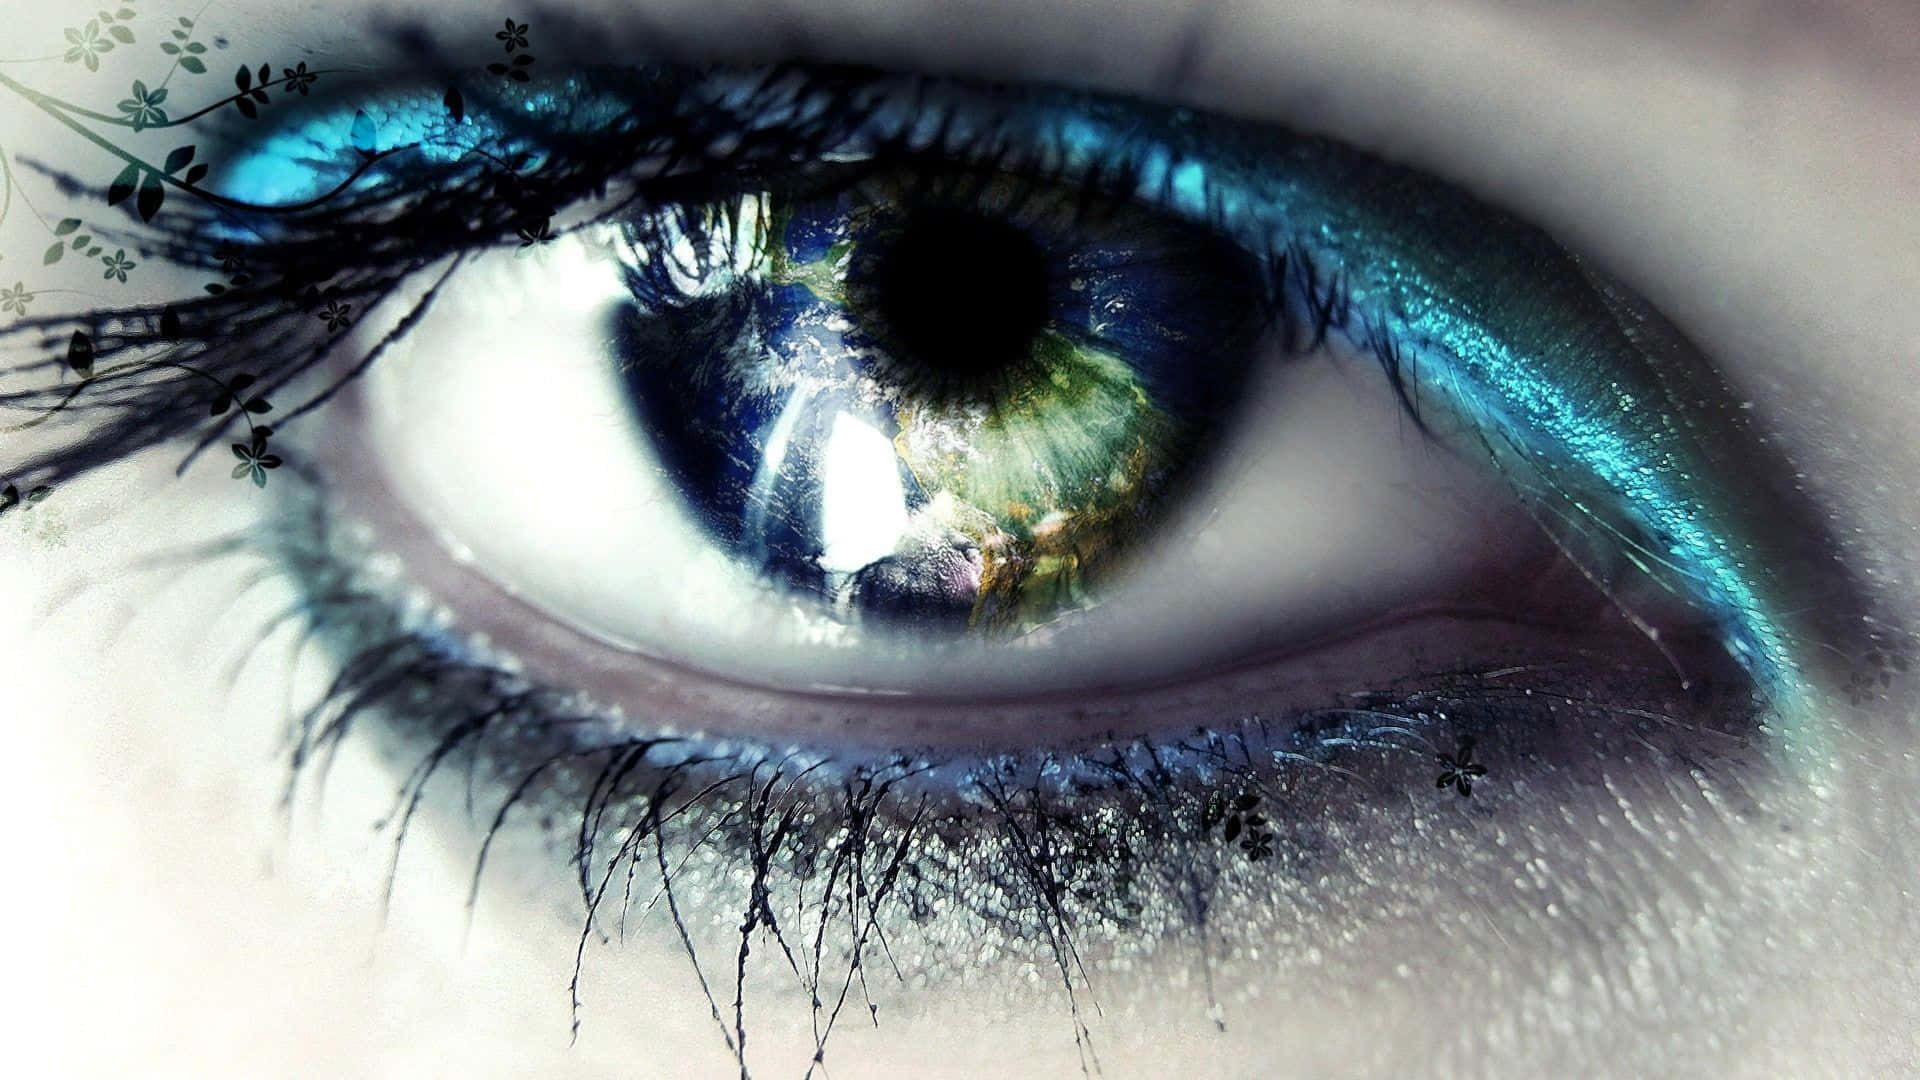 Caption: Mesmerizing Closeup of an Eye with Metallic Blue Liners Wallpaper